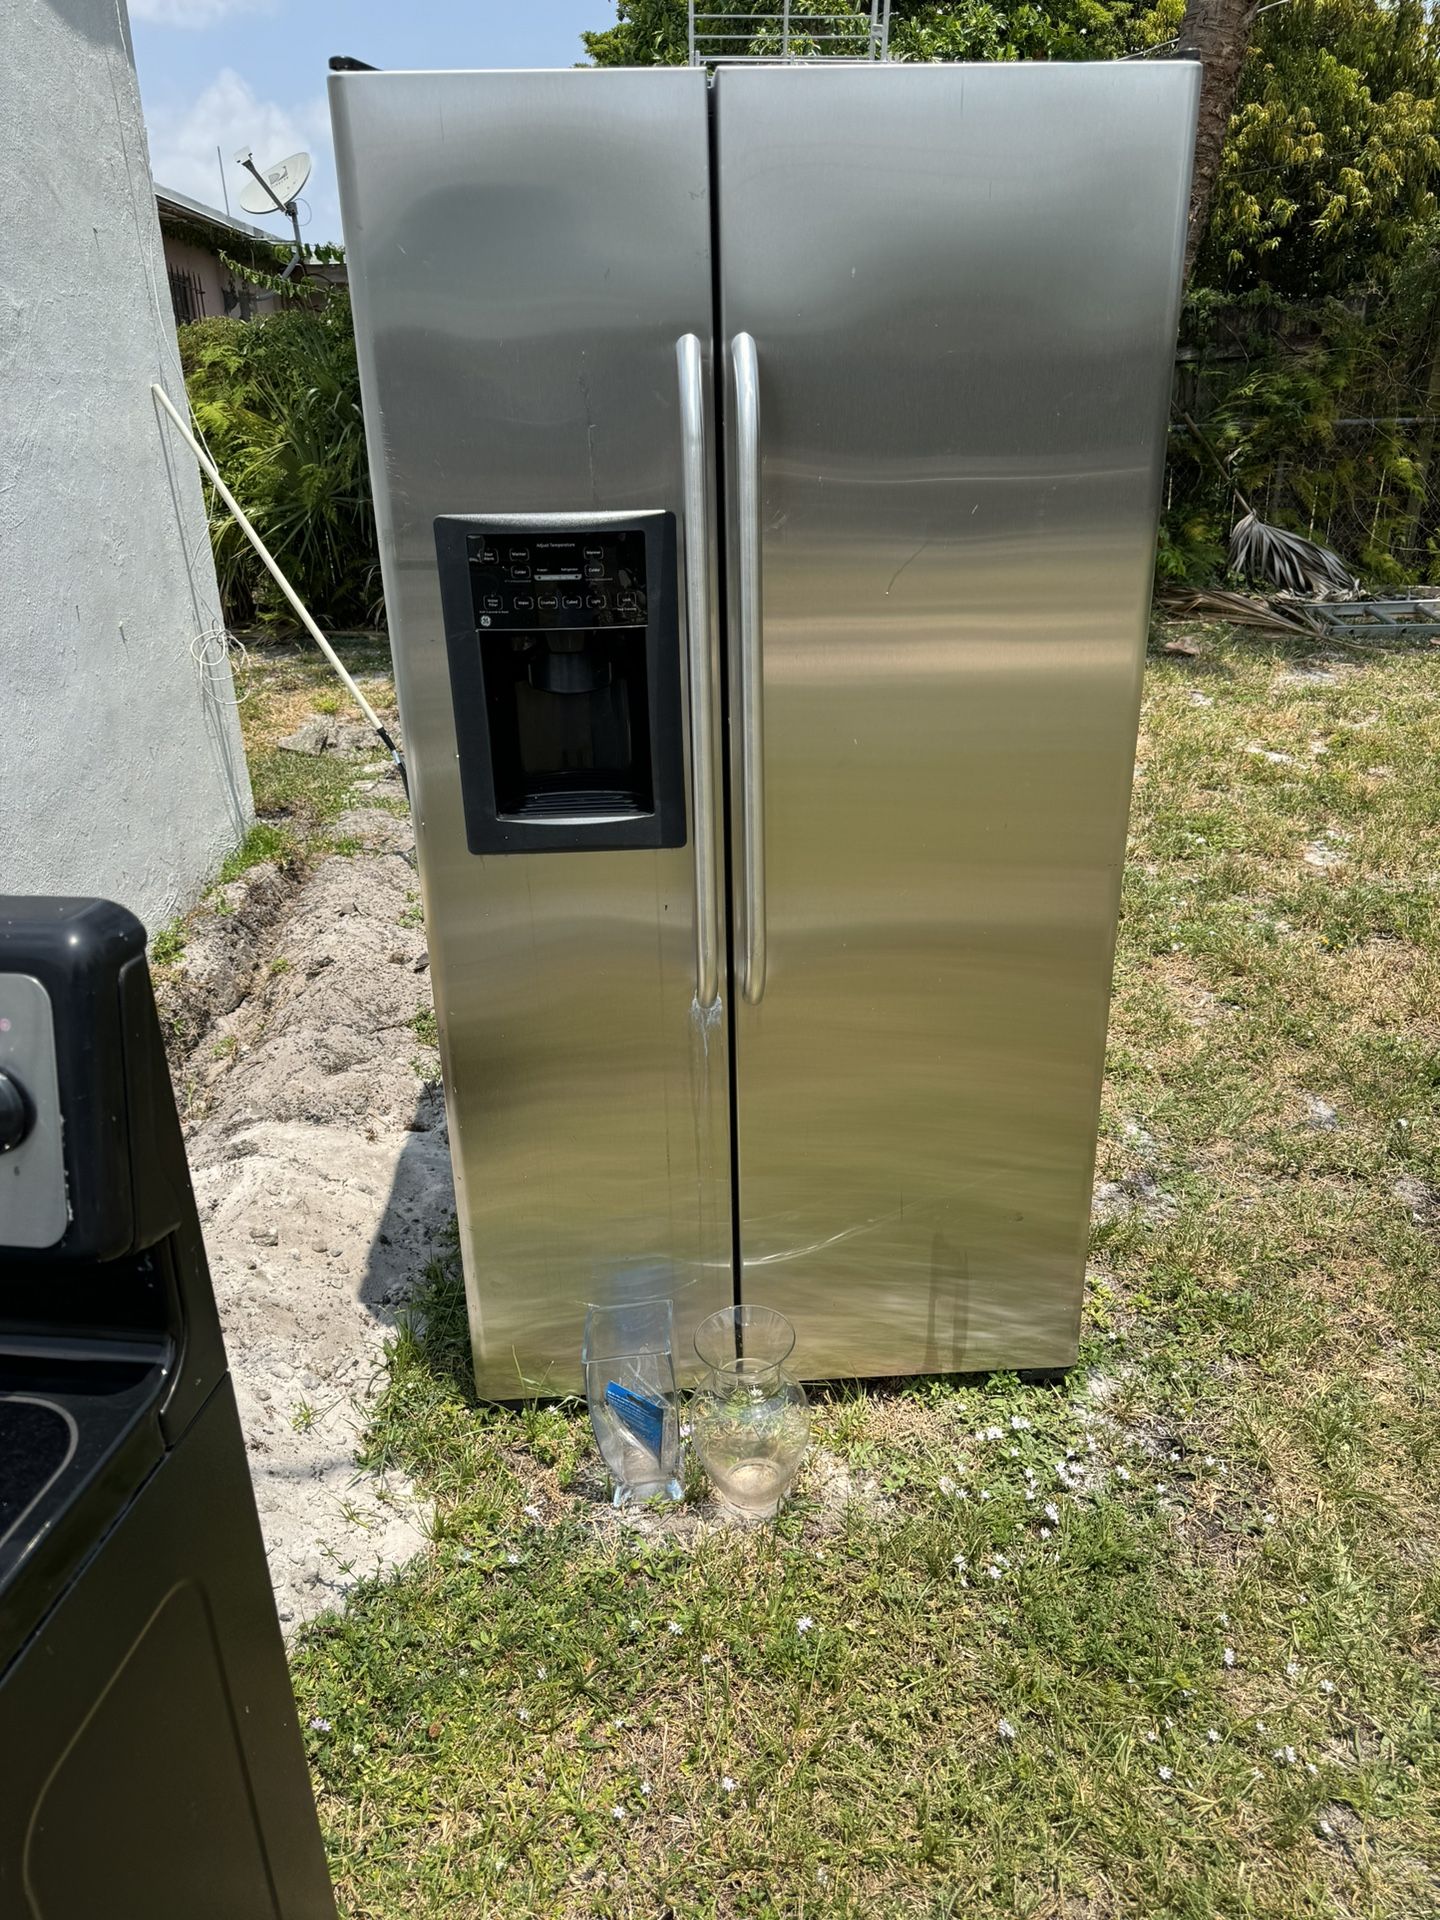 GE Refrigerator  Model #:GSS25WSTSS